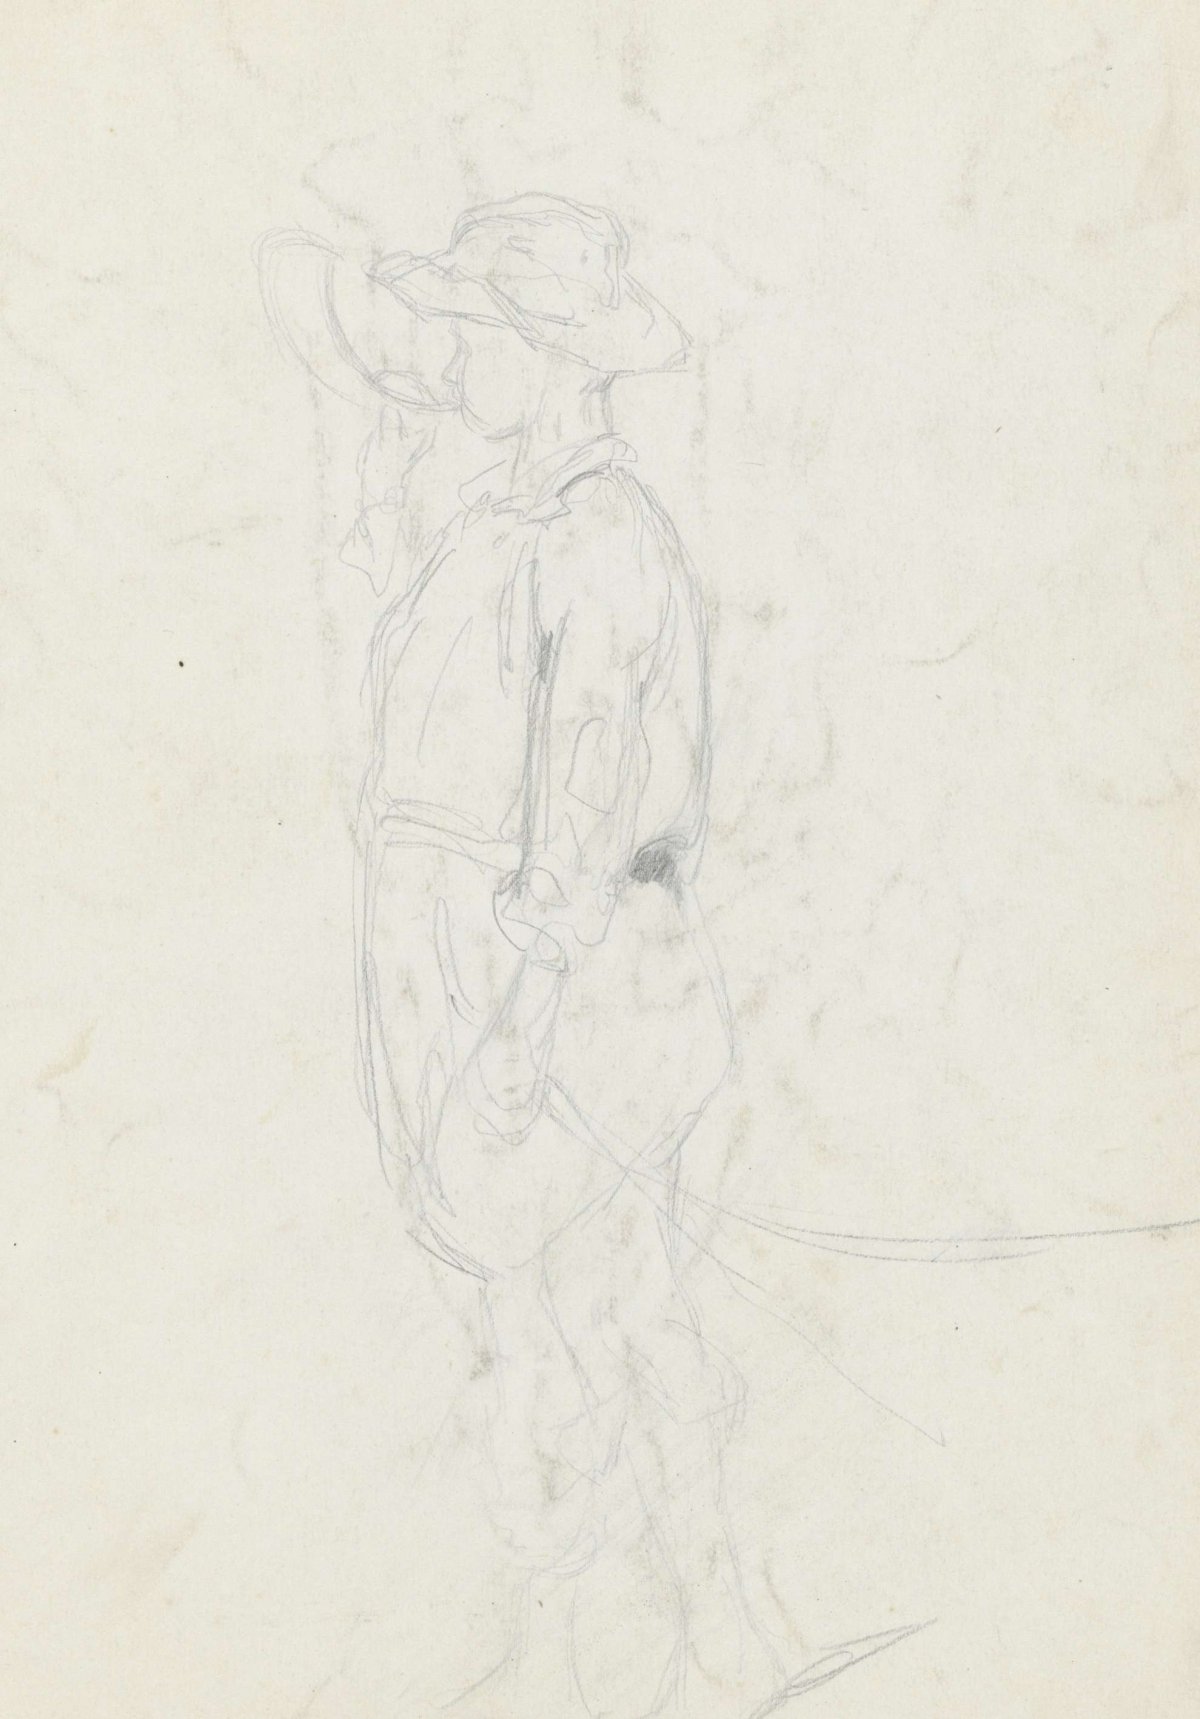 Sketch of a boy blowing a horn, Anton Mauve, 1848 - 1888